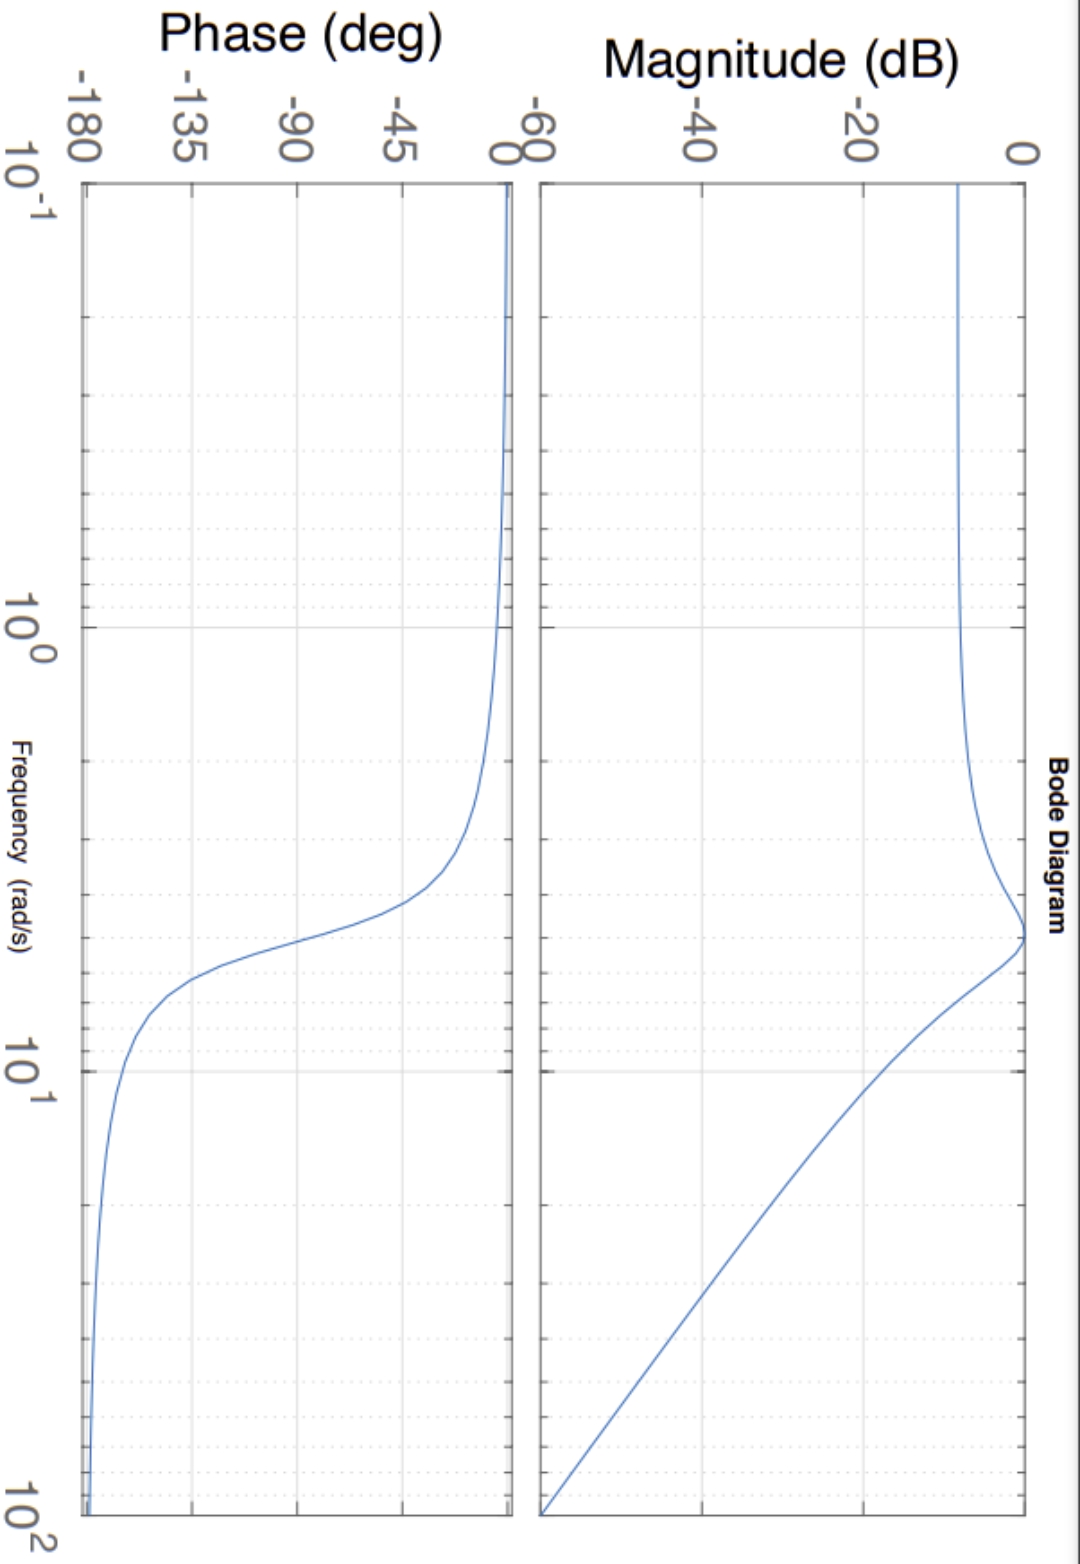 Magnitude (dB)
Phase (deg)
0
-20
-40
-68
-45
-90
-135
-180
10-1
10
Bode Diagram
Frequency (rad/s)
101
10²